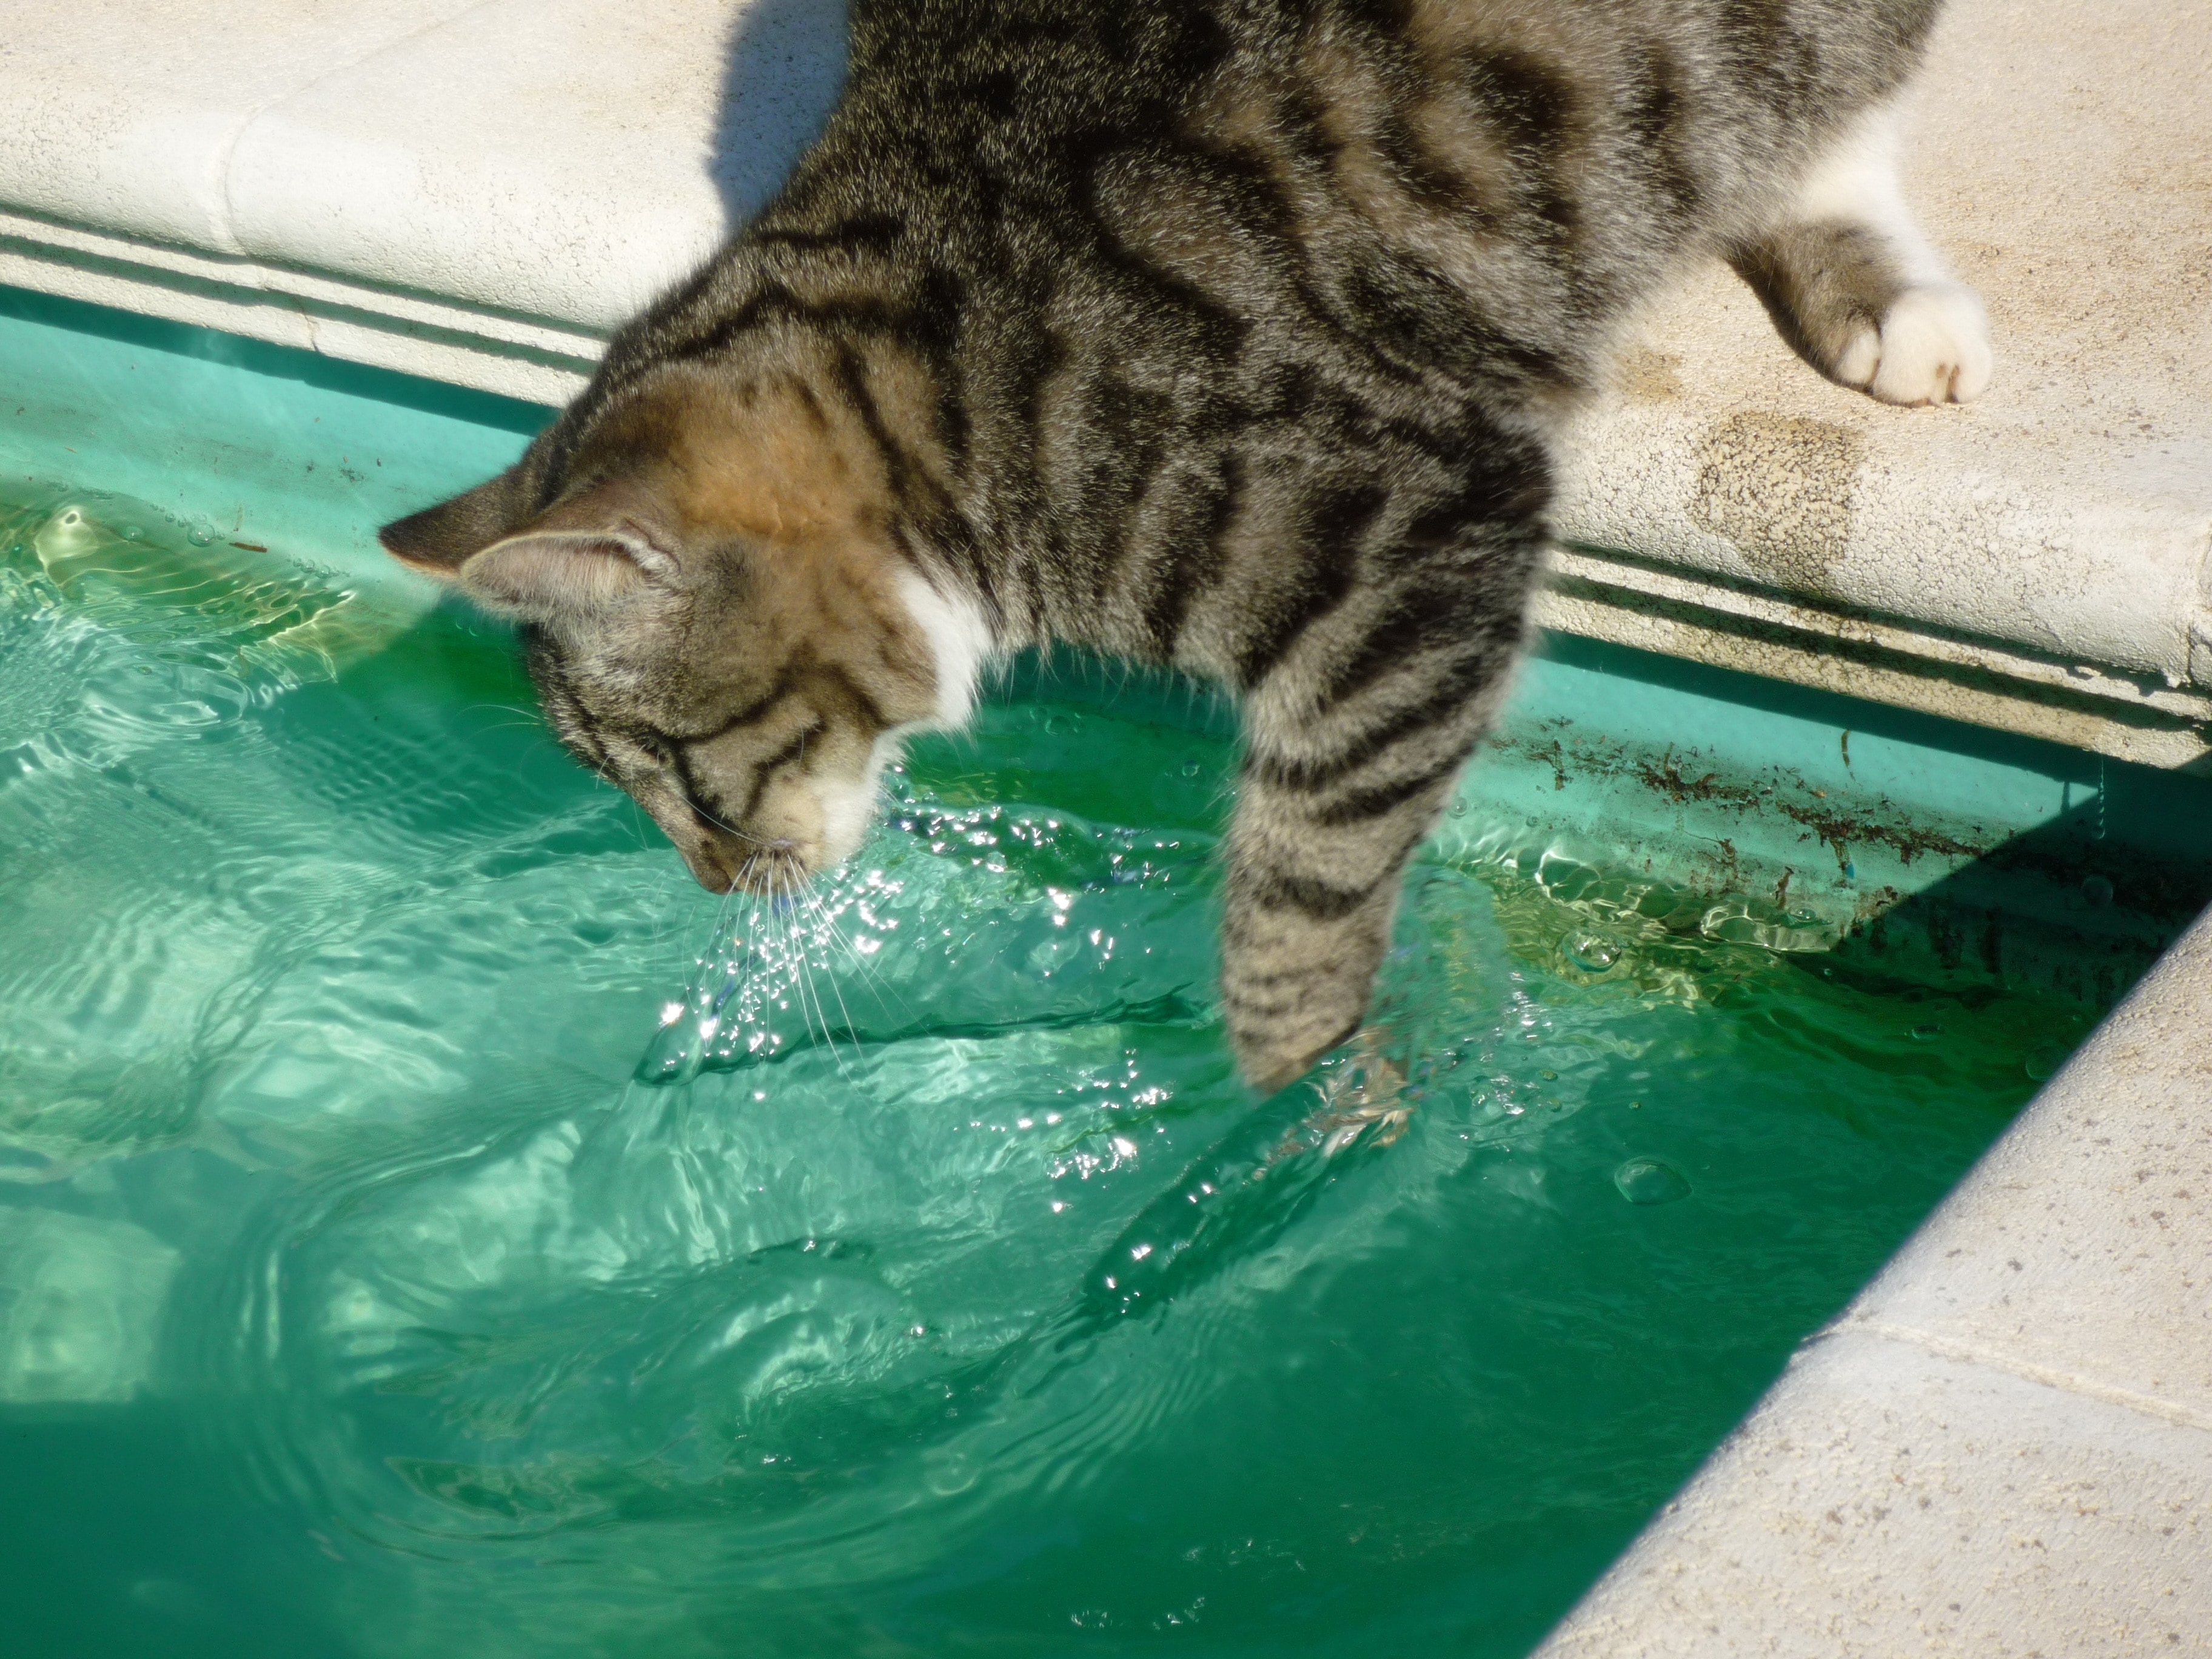 Feline, Furry, Cat Fishing In Pool, Pet, water, one animal